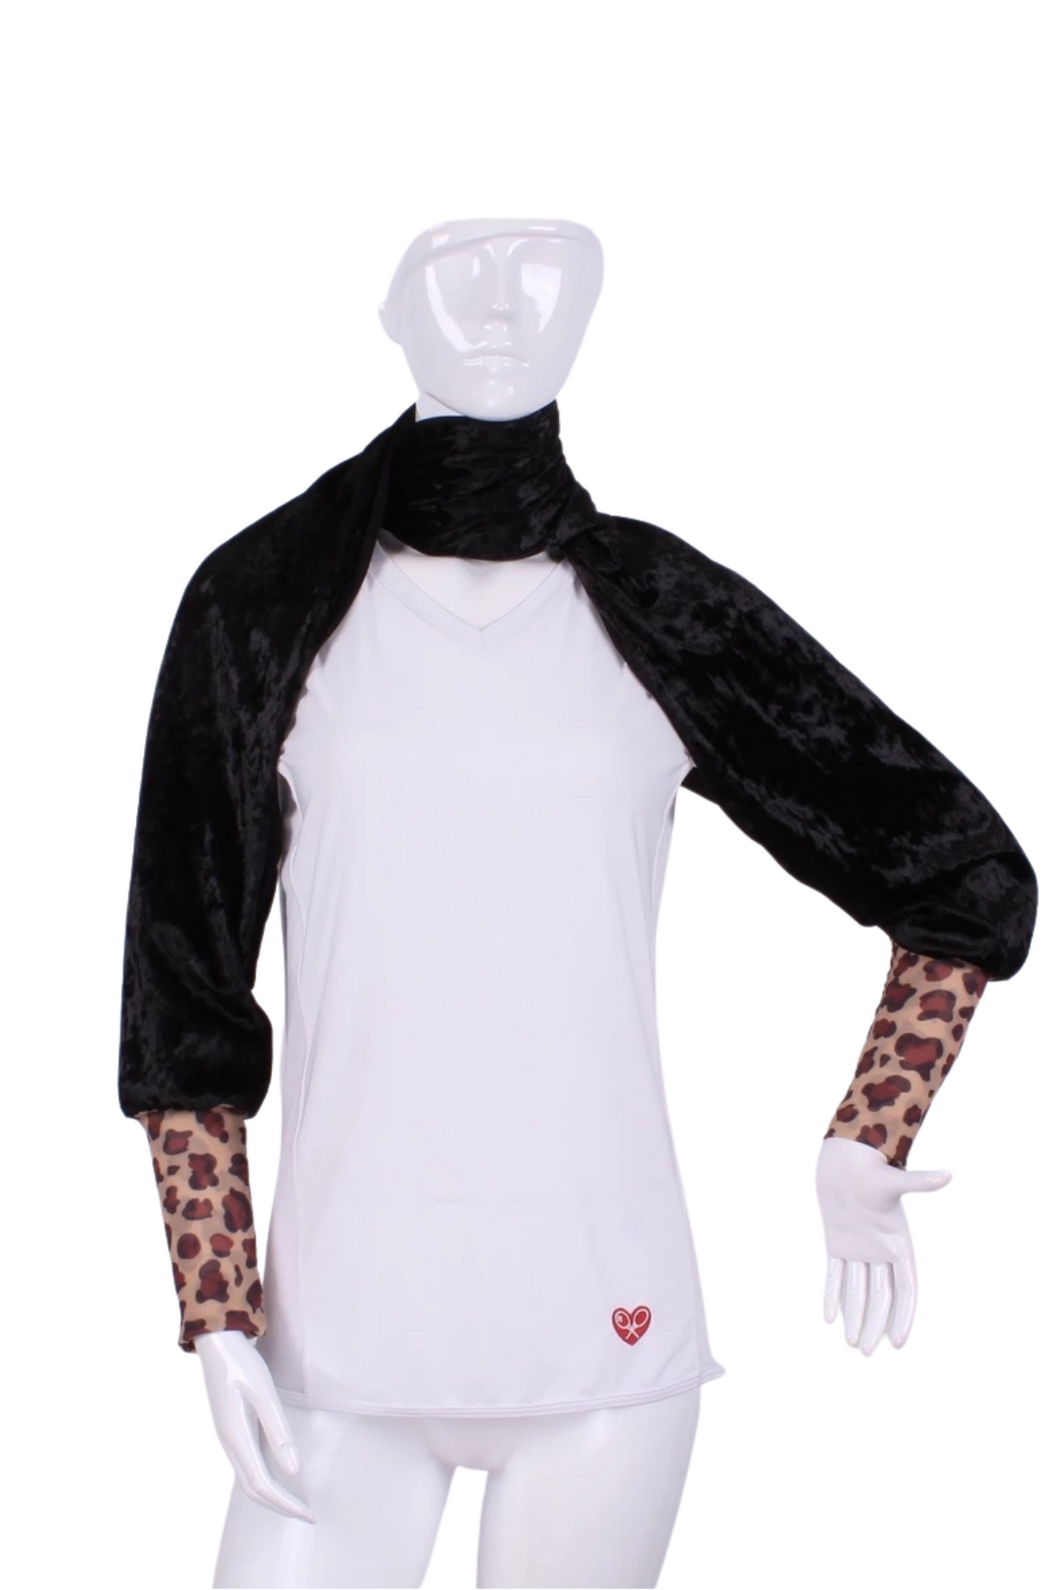 Crushed Black Velvet + Leopard Mesh Scarf Vest (Reversible) - I LOVE MY DOUBLES PARTNER!!!